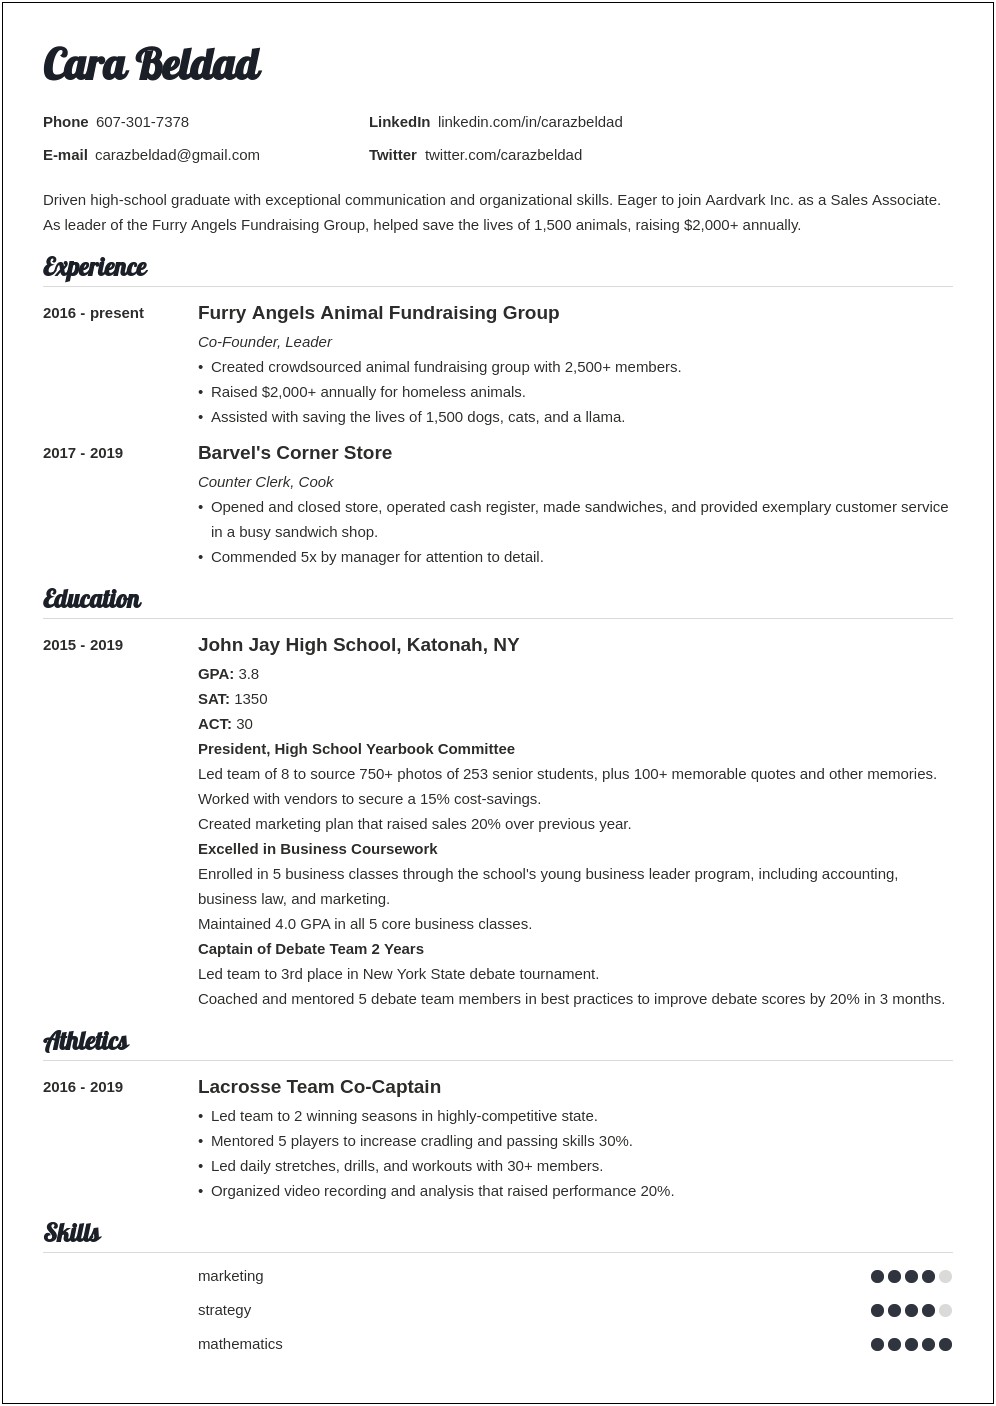 Sample Resume For Highschool Graduate Student